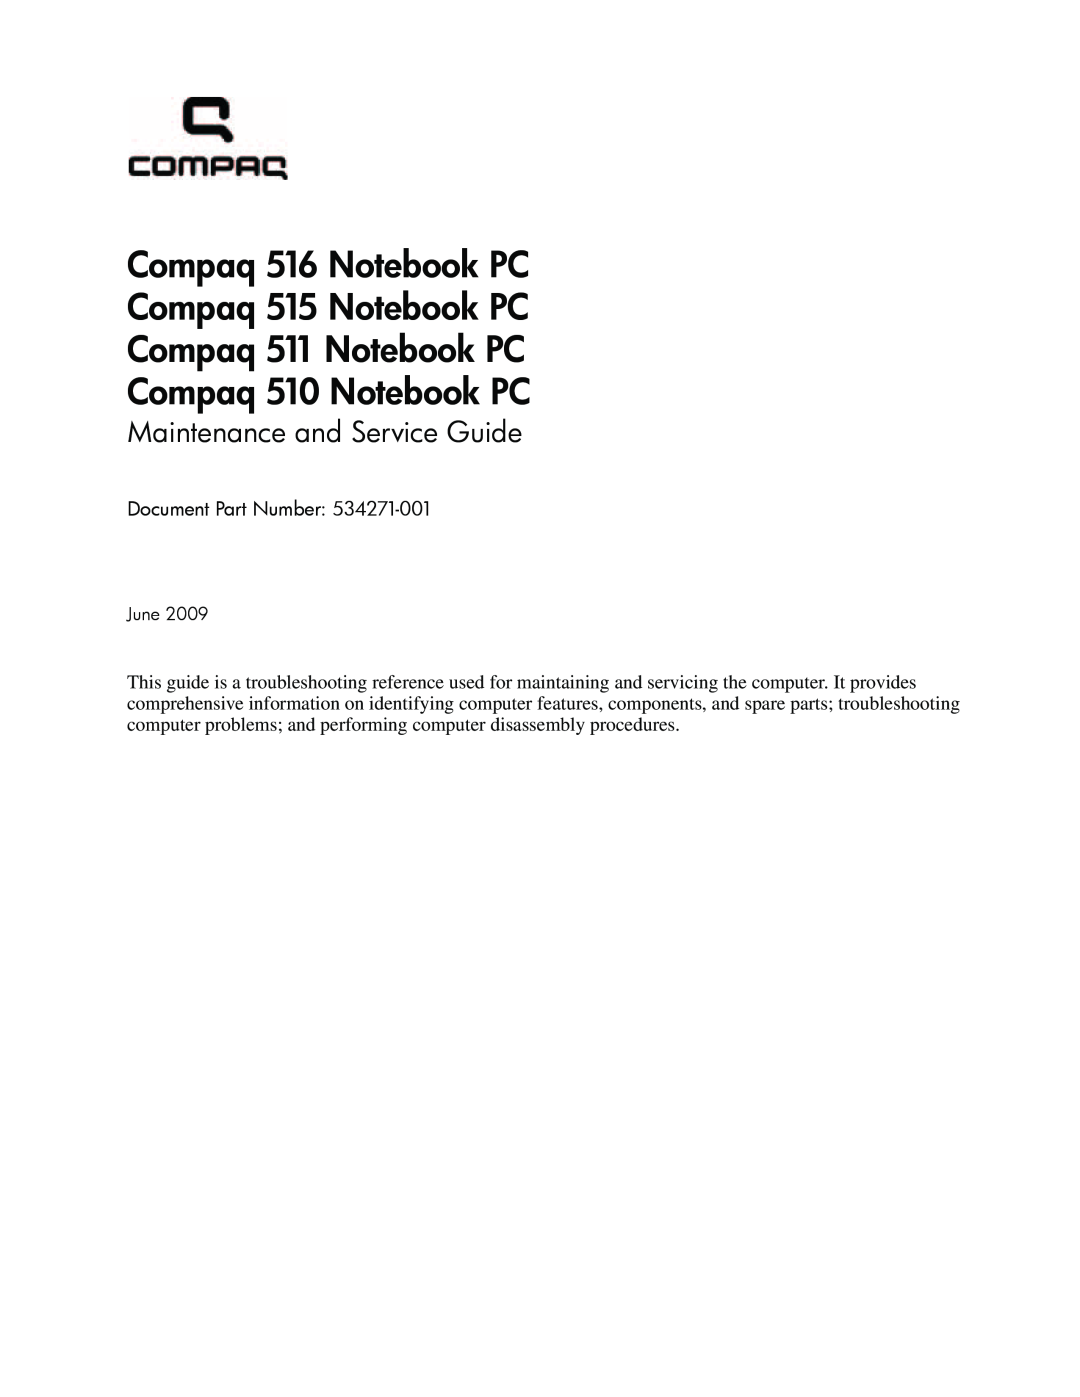 Compaq manual Compaq 516 Notebook PC Compaq 515 Notebook PC Compaq 511 Notebook PC, Compaq 510 Notebook PC 